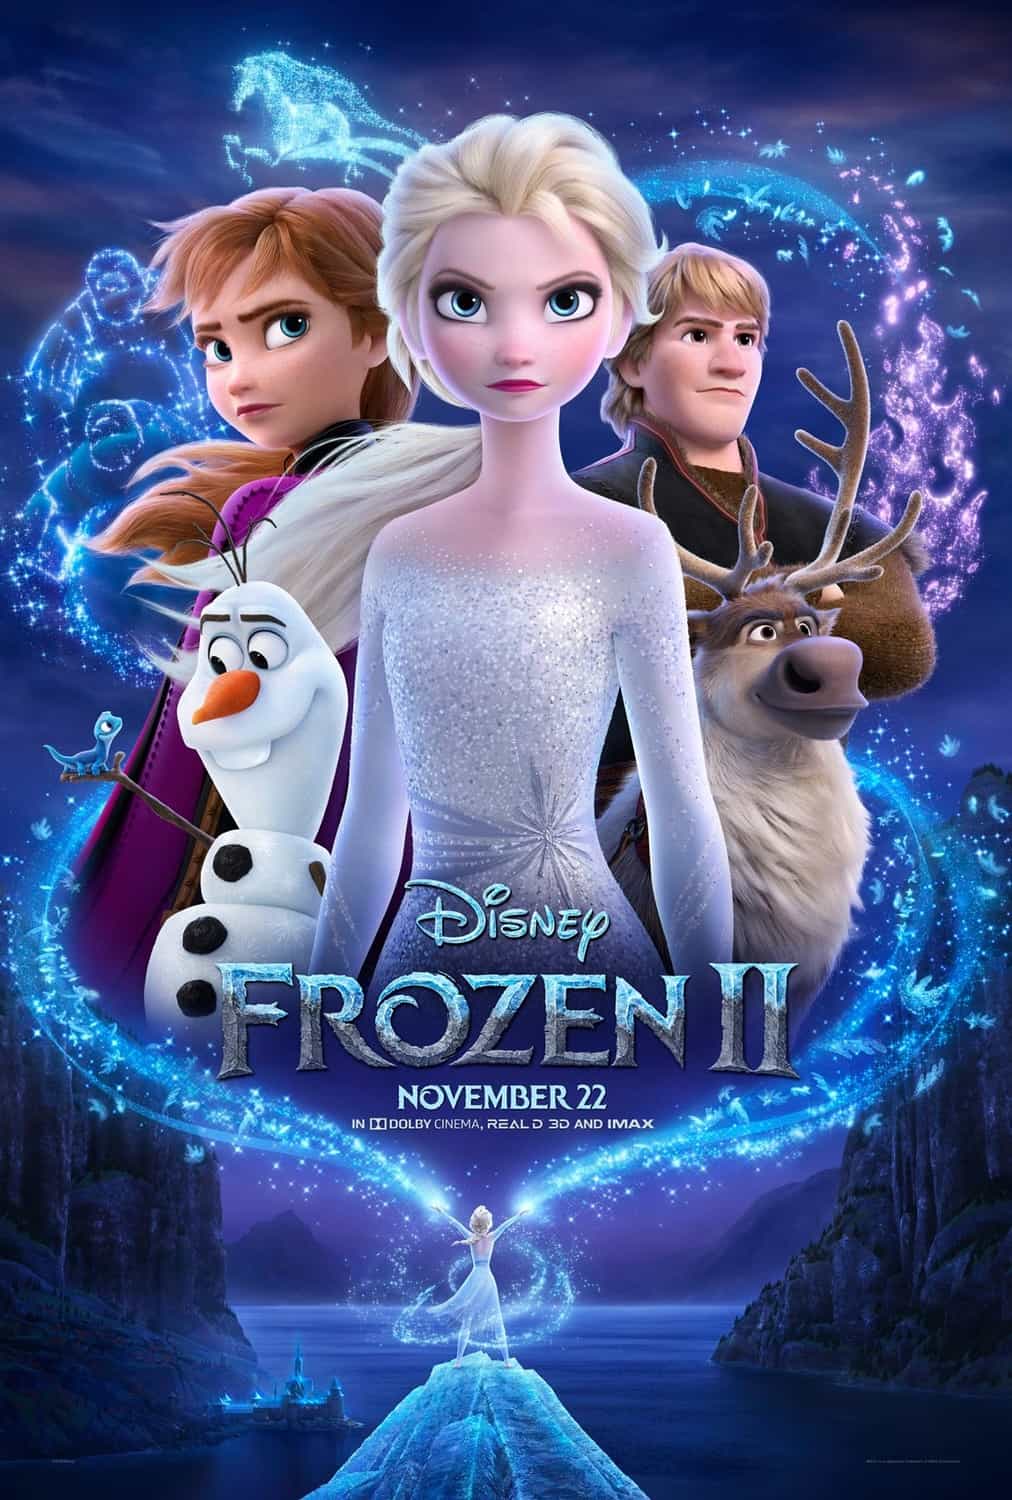 New trailer for Disneys Frozen II ahead of its November 2019 release